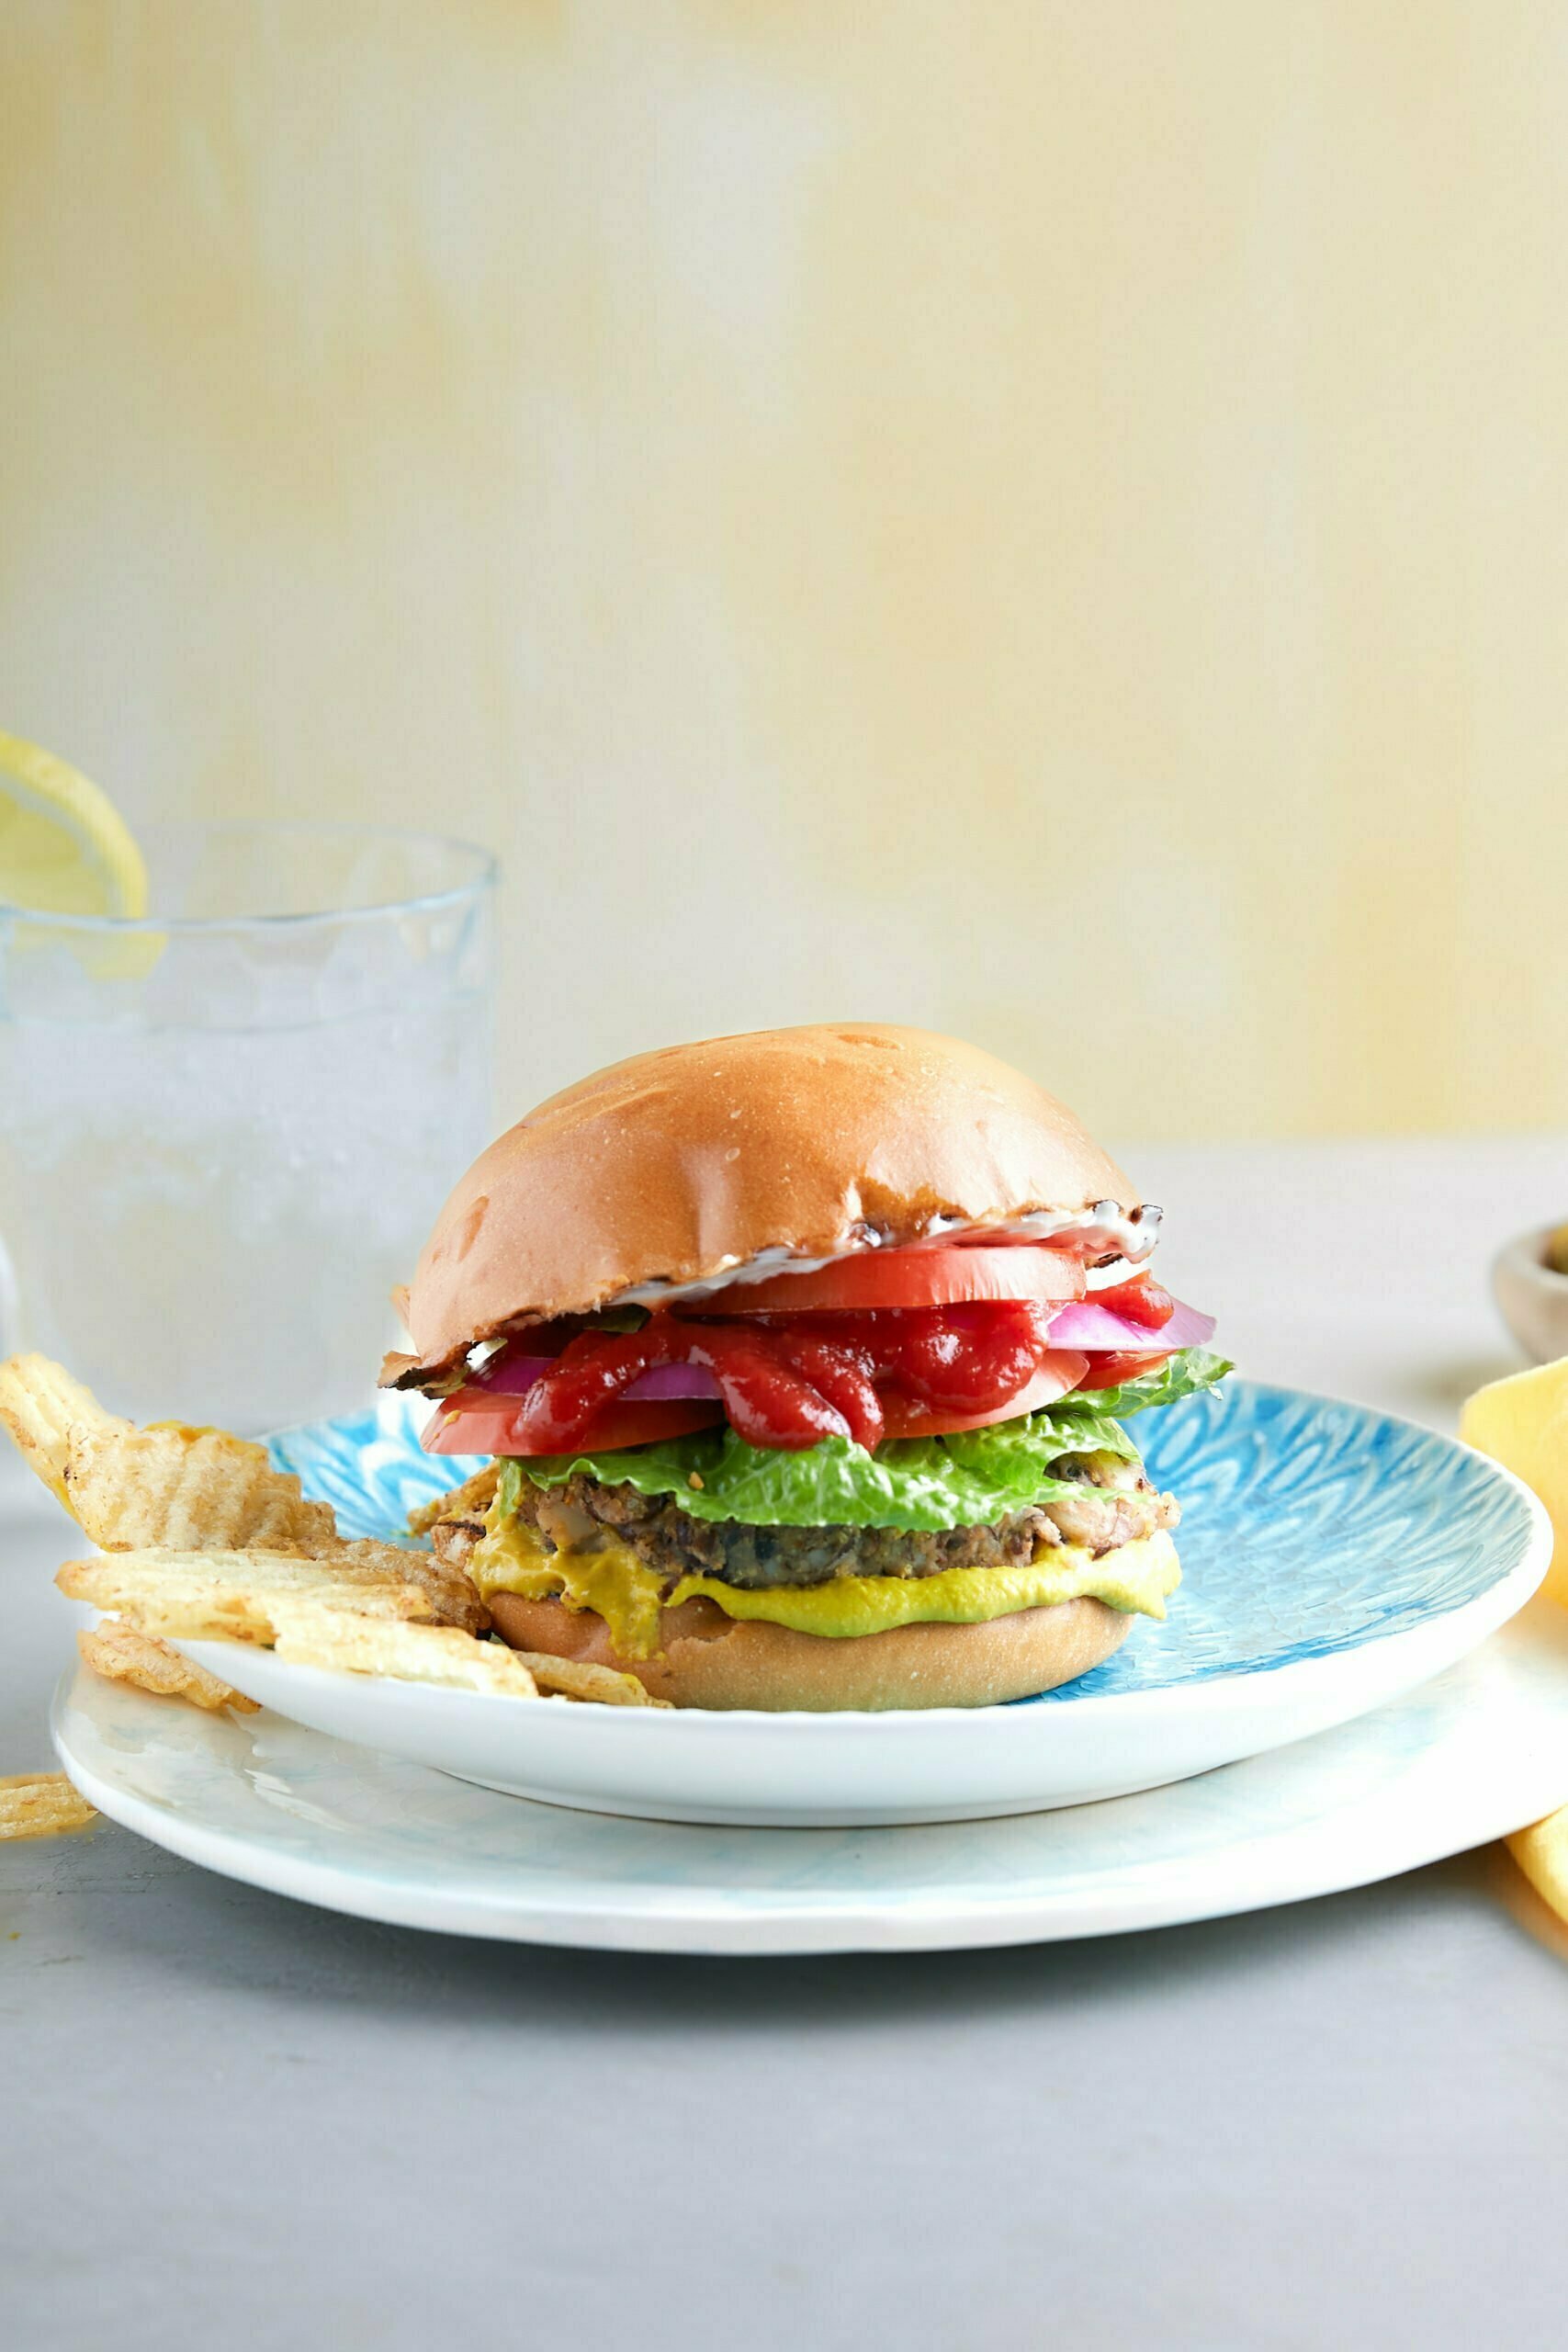 A vegan burger on a plate.